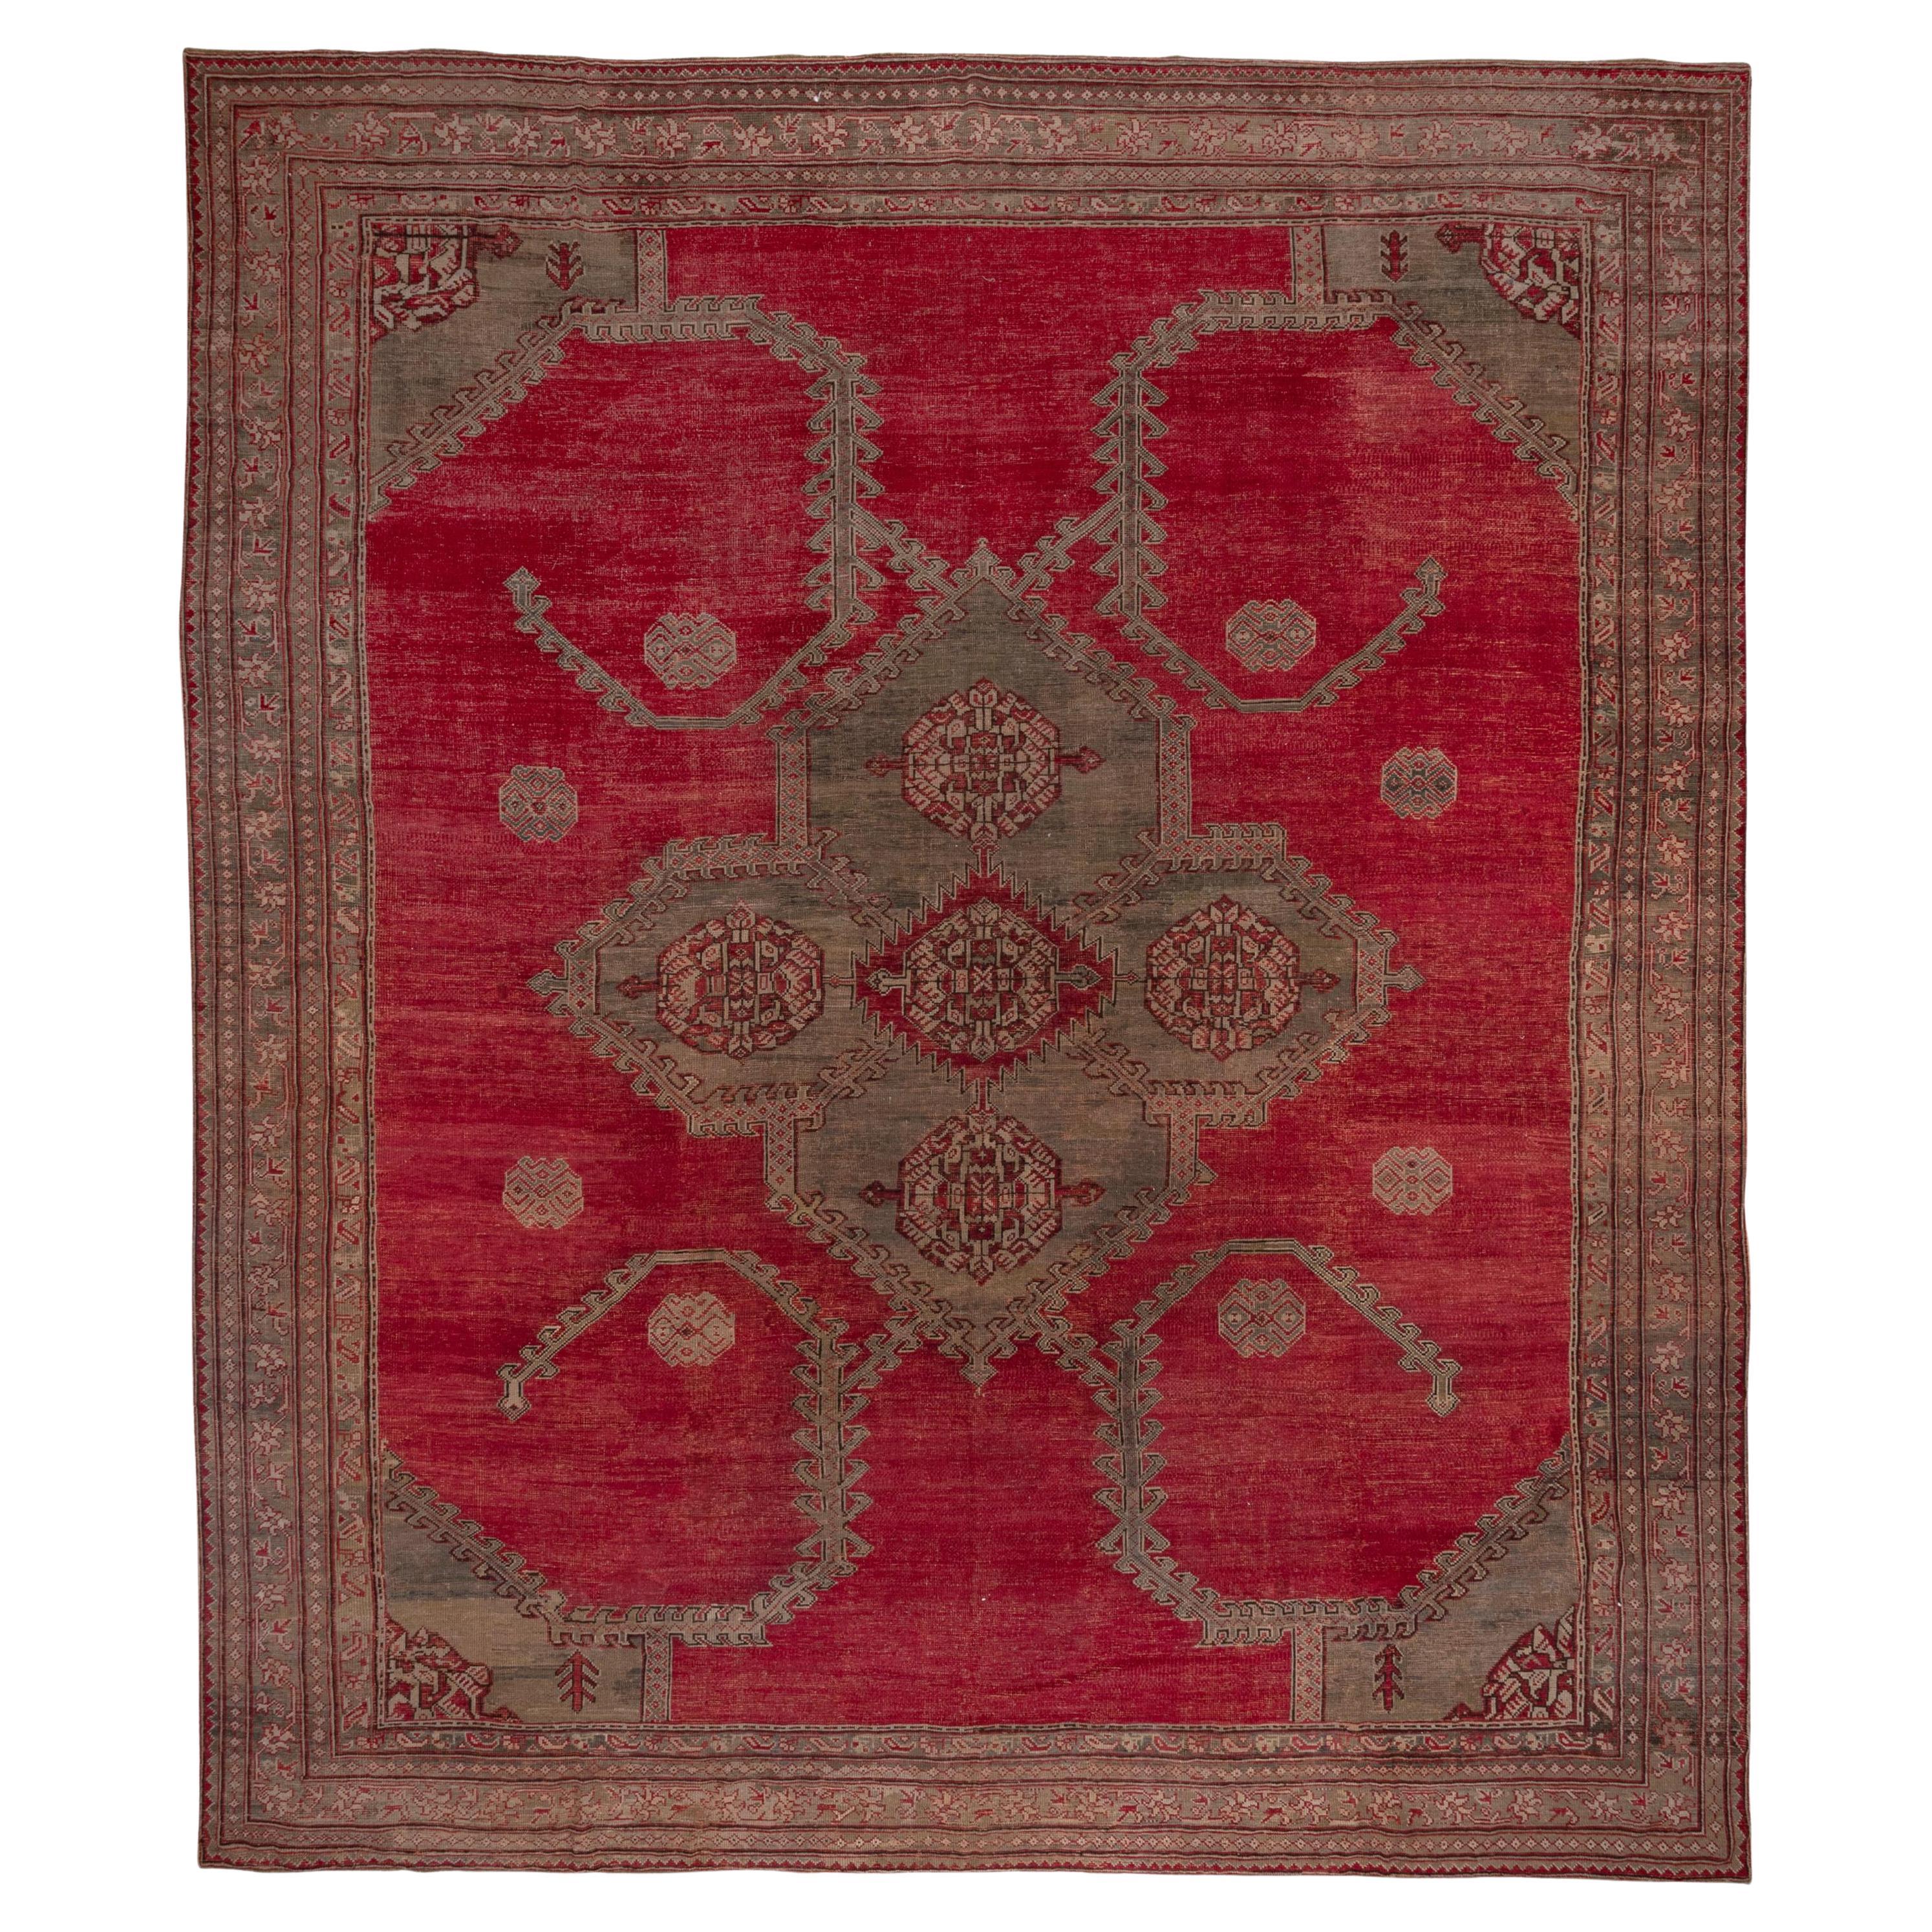 Fine Antique Red Oushak Carpet, circa 1900s